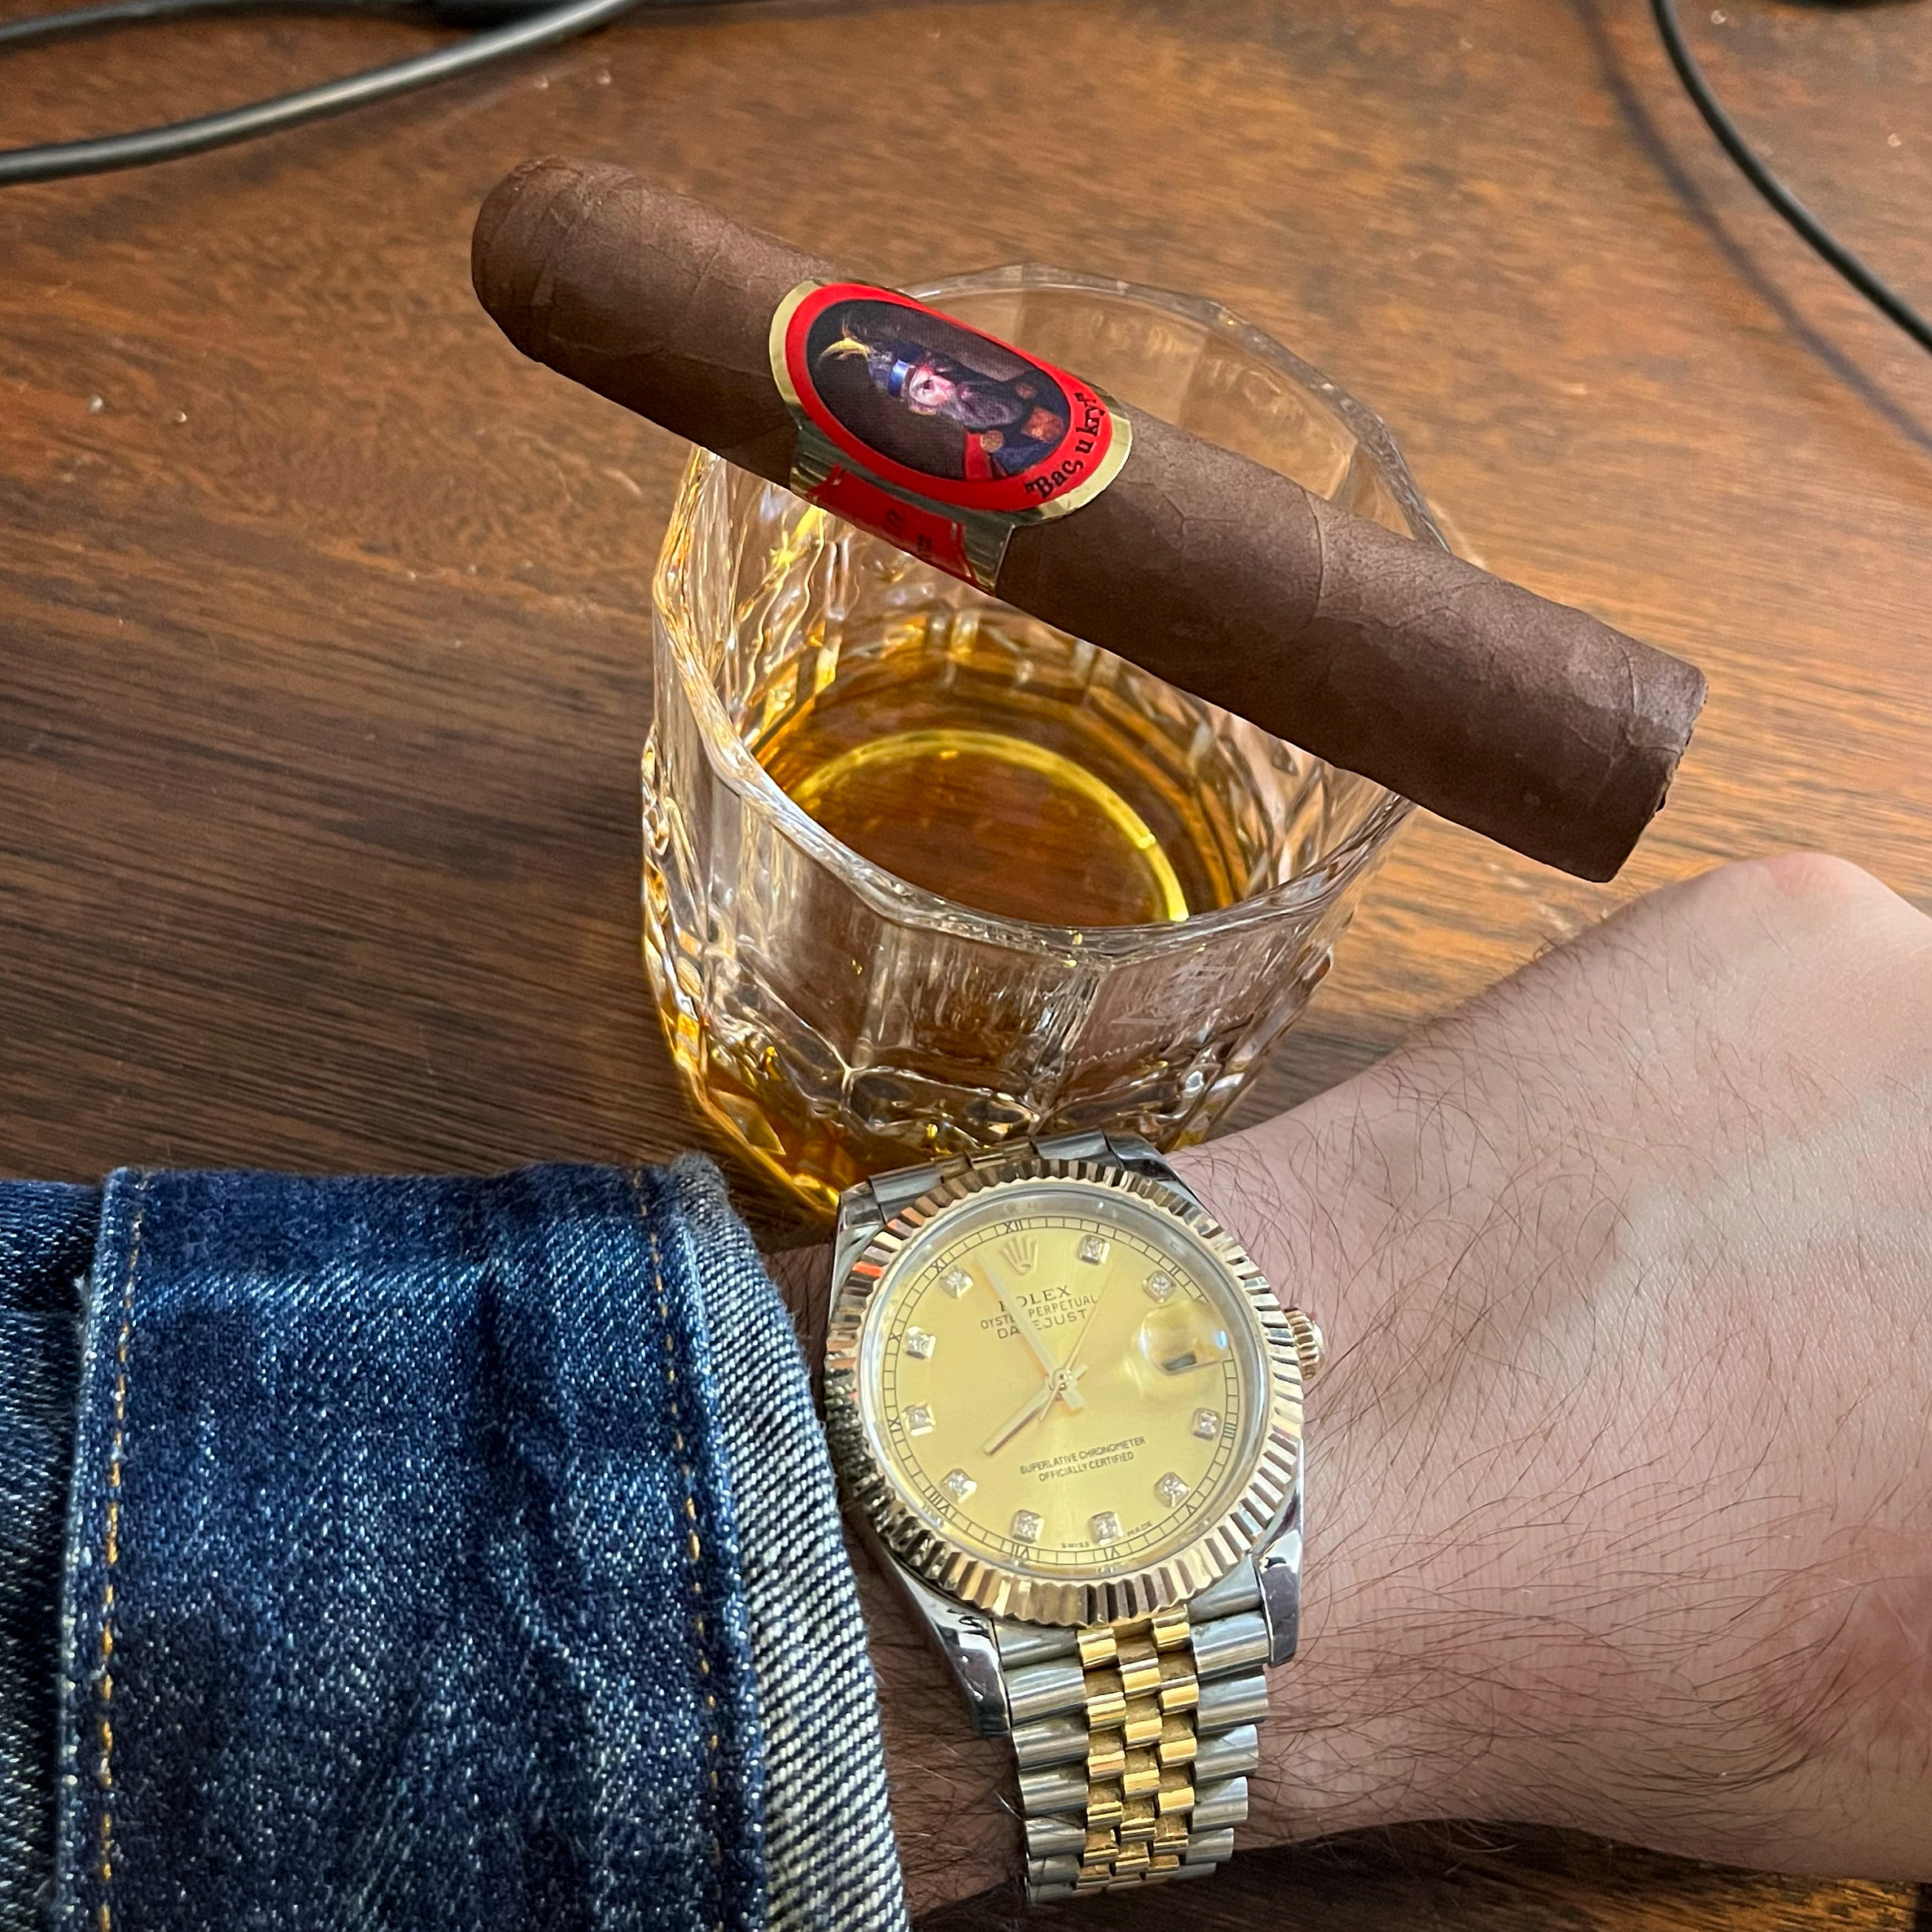 Besa Cigar and Datejust Rolex